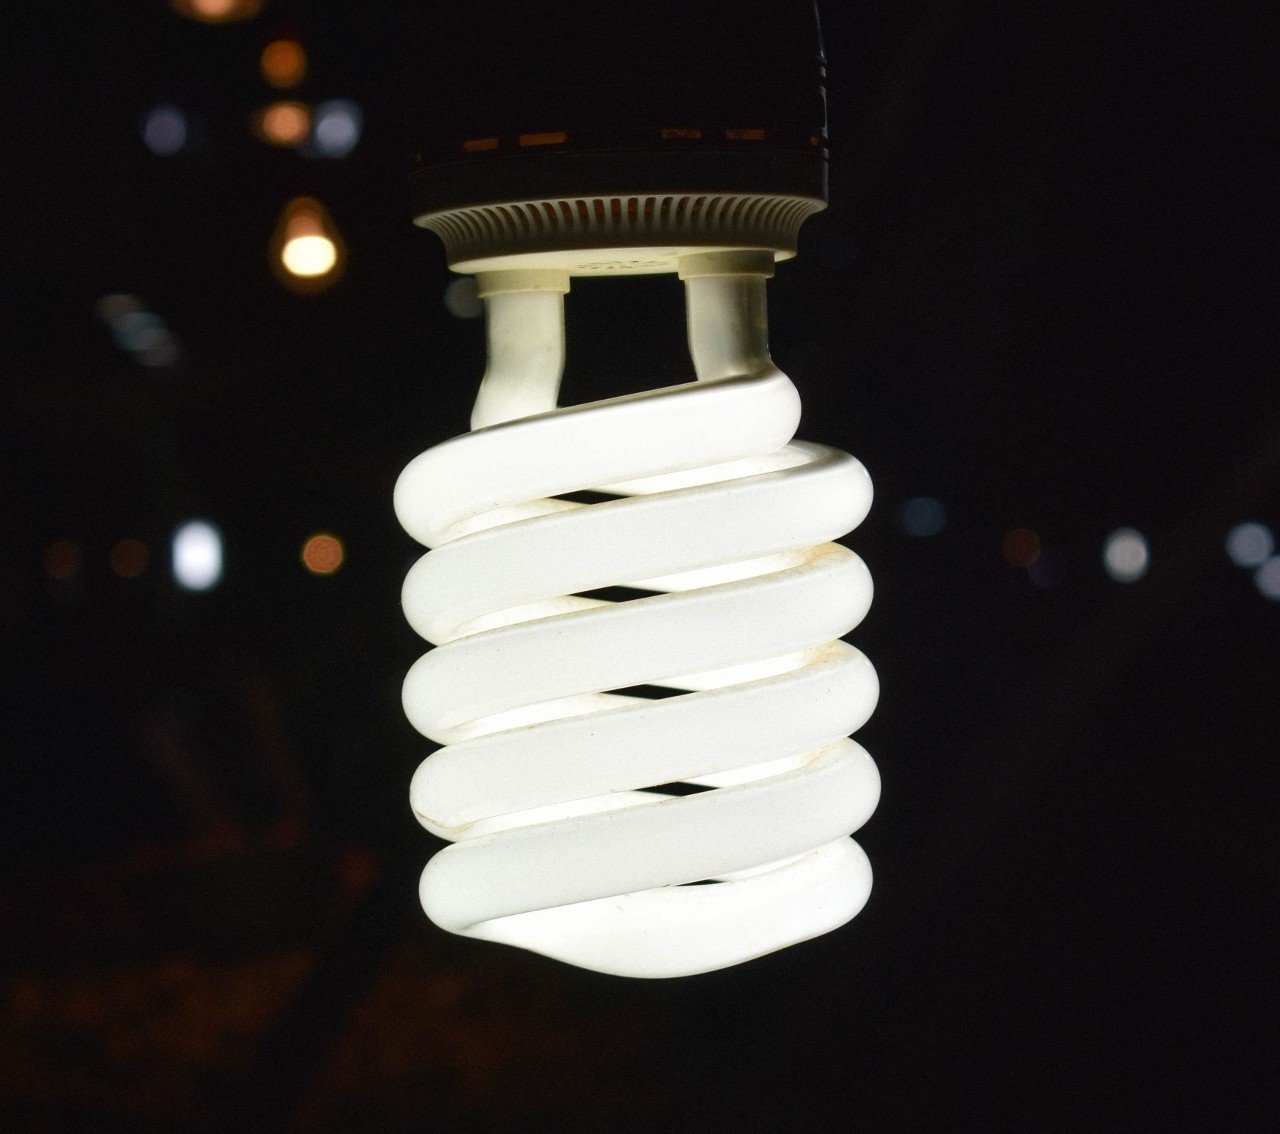 Smarter lighting choices